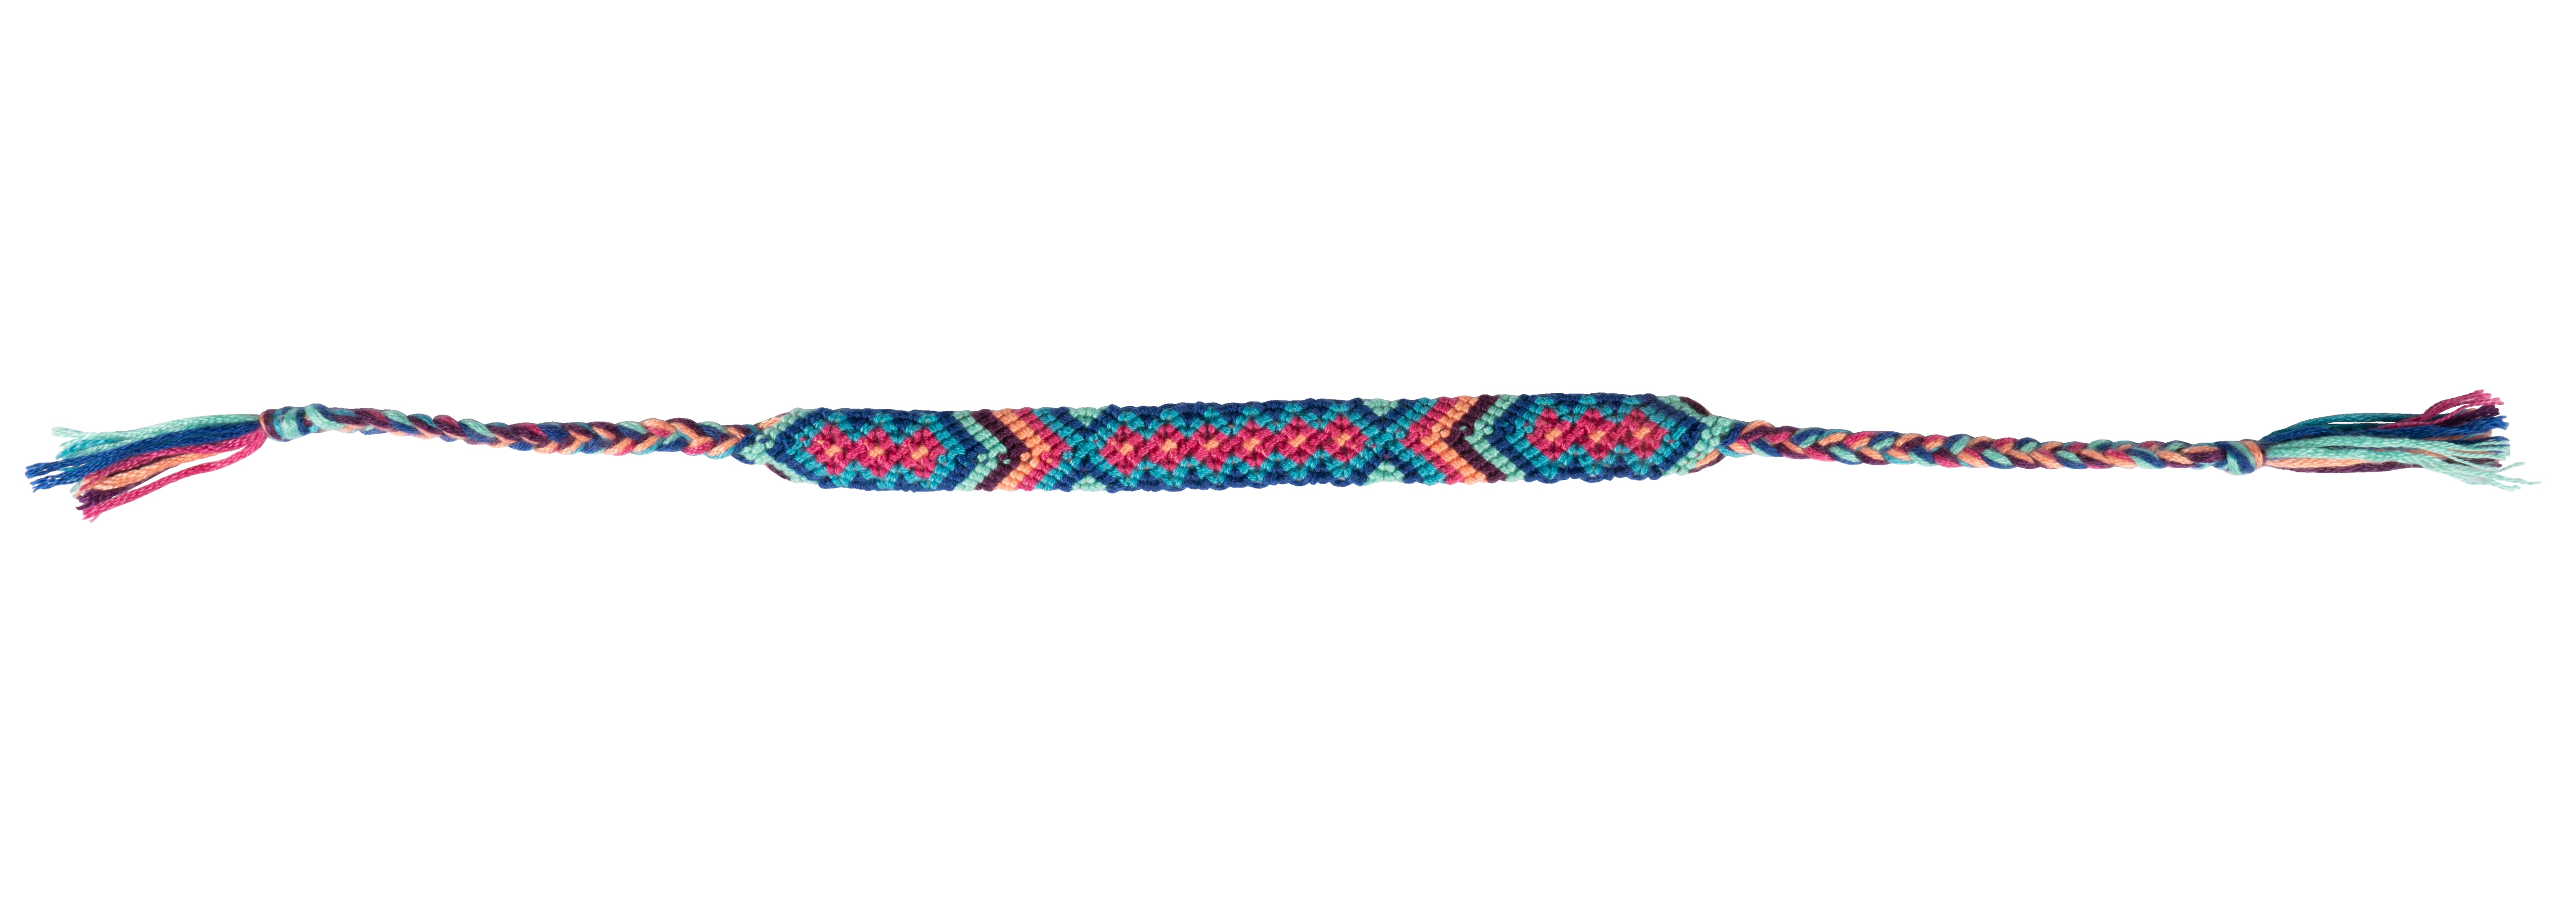 Fabric Bracelet Handmade Braided Rope Friendship Gift Beads Cloth Bracelets  | eBay